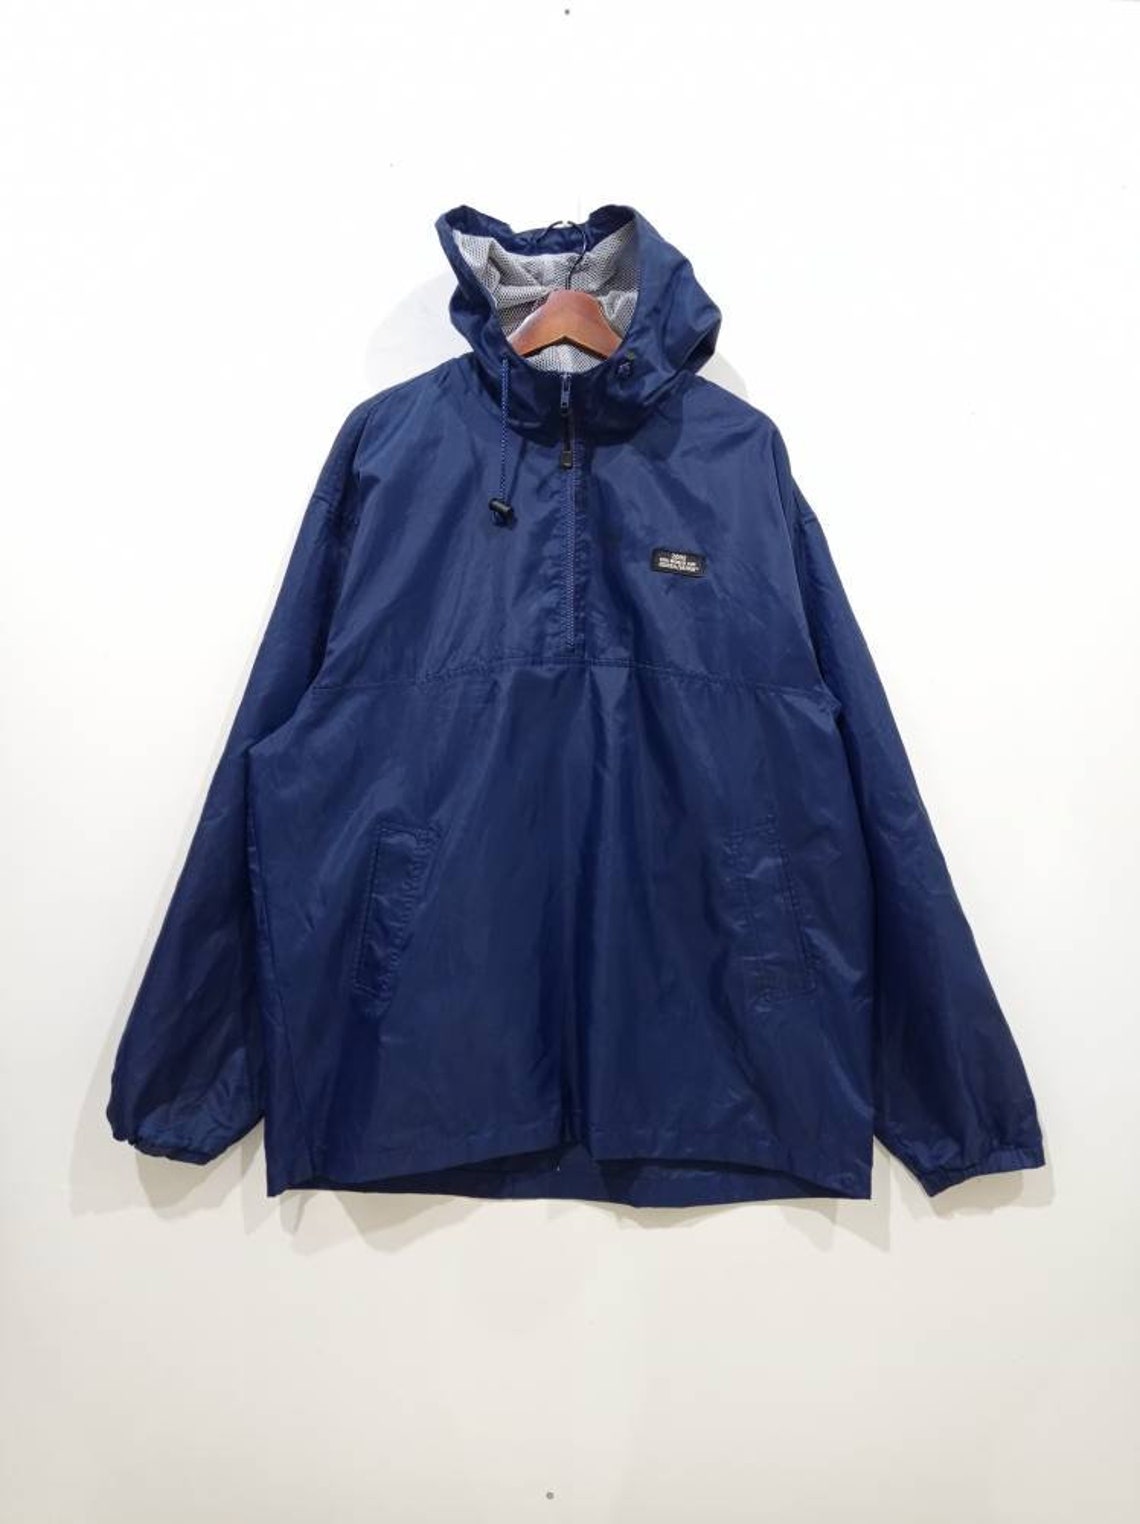 Vintage Korea/Japan worldcup windbreaker jacket size L XL | Etsy